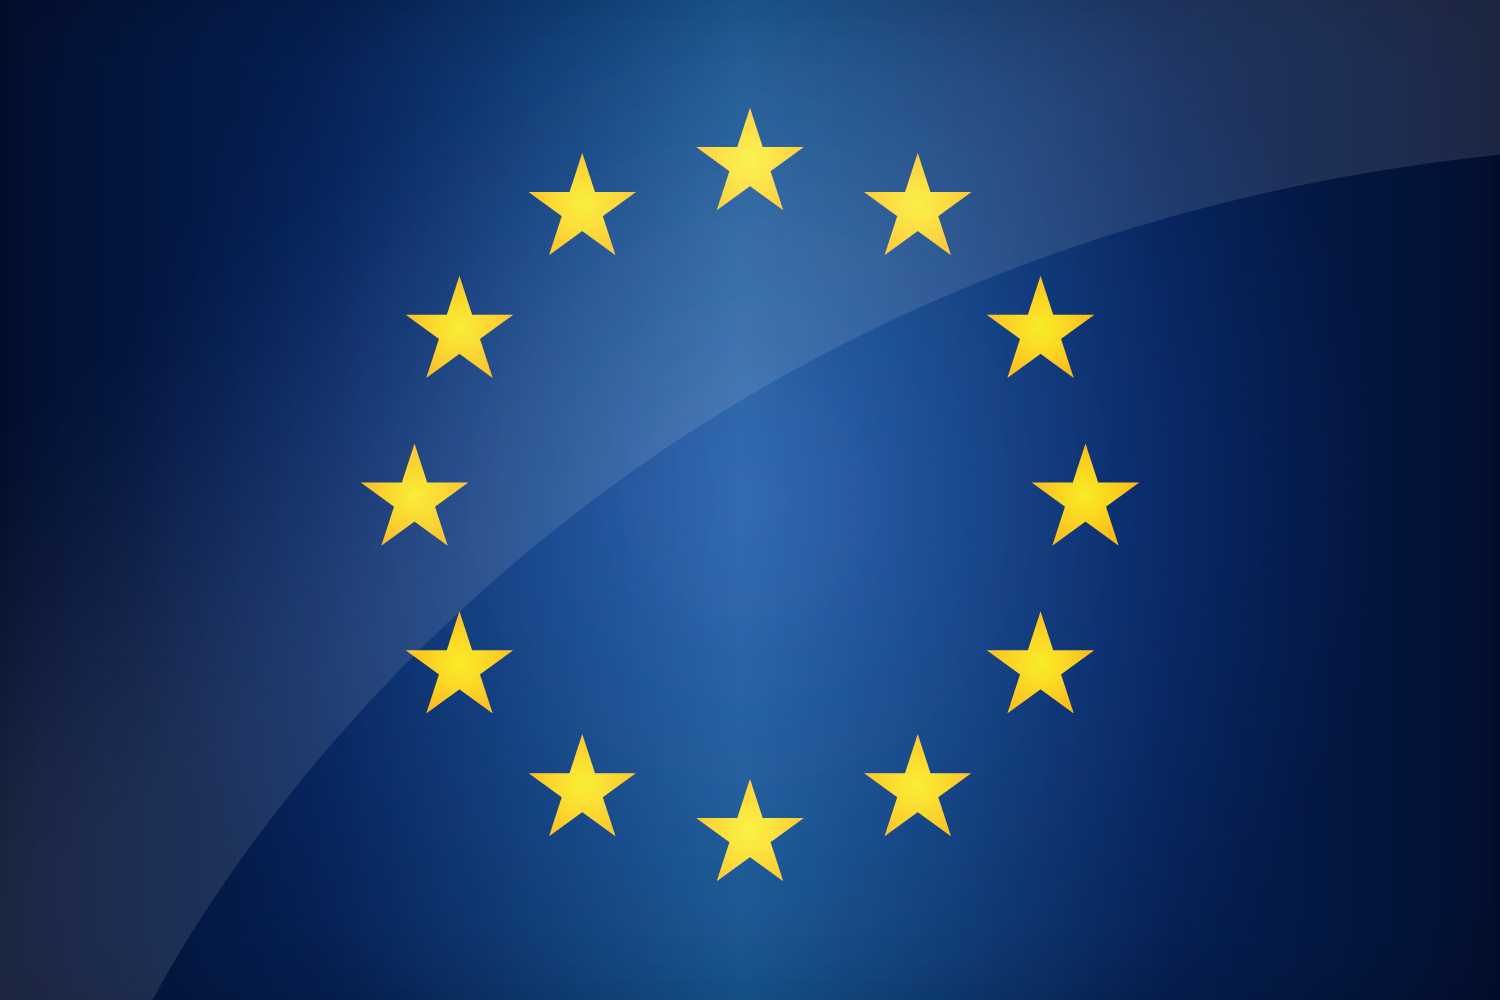 Flag of Europe - Find the best design for European Flag